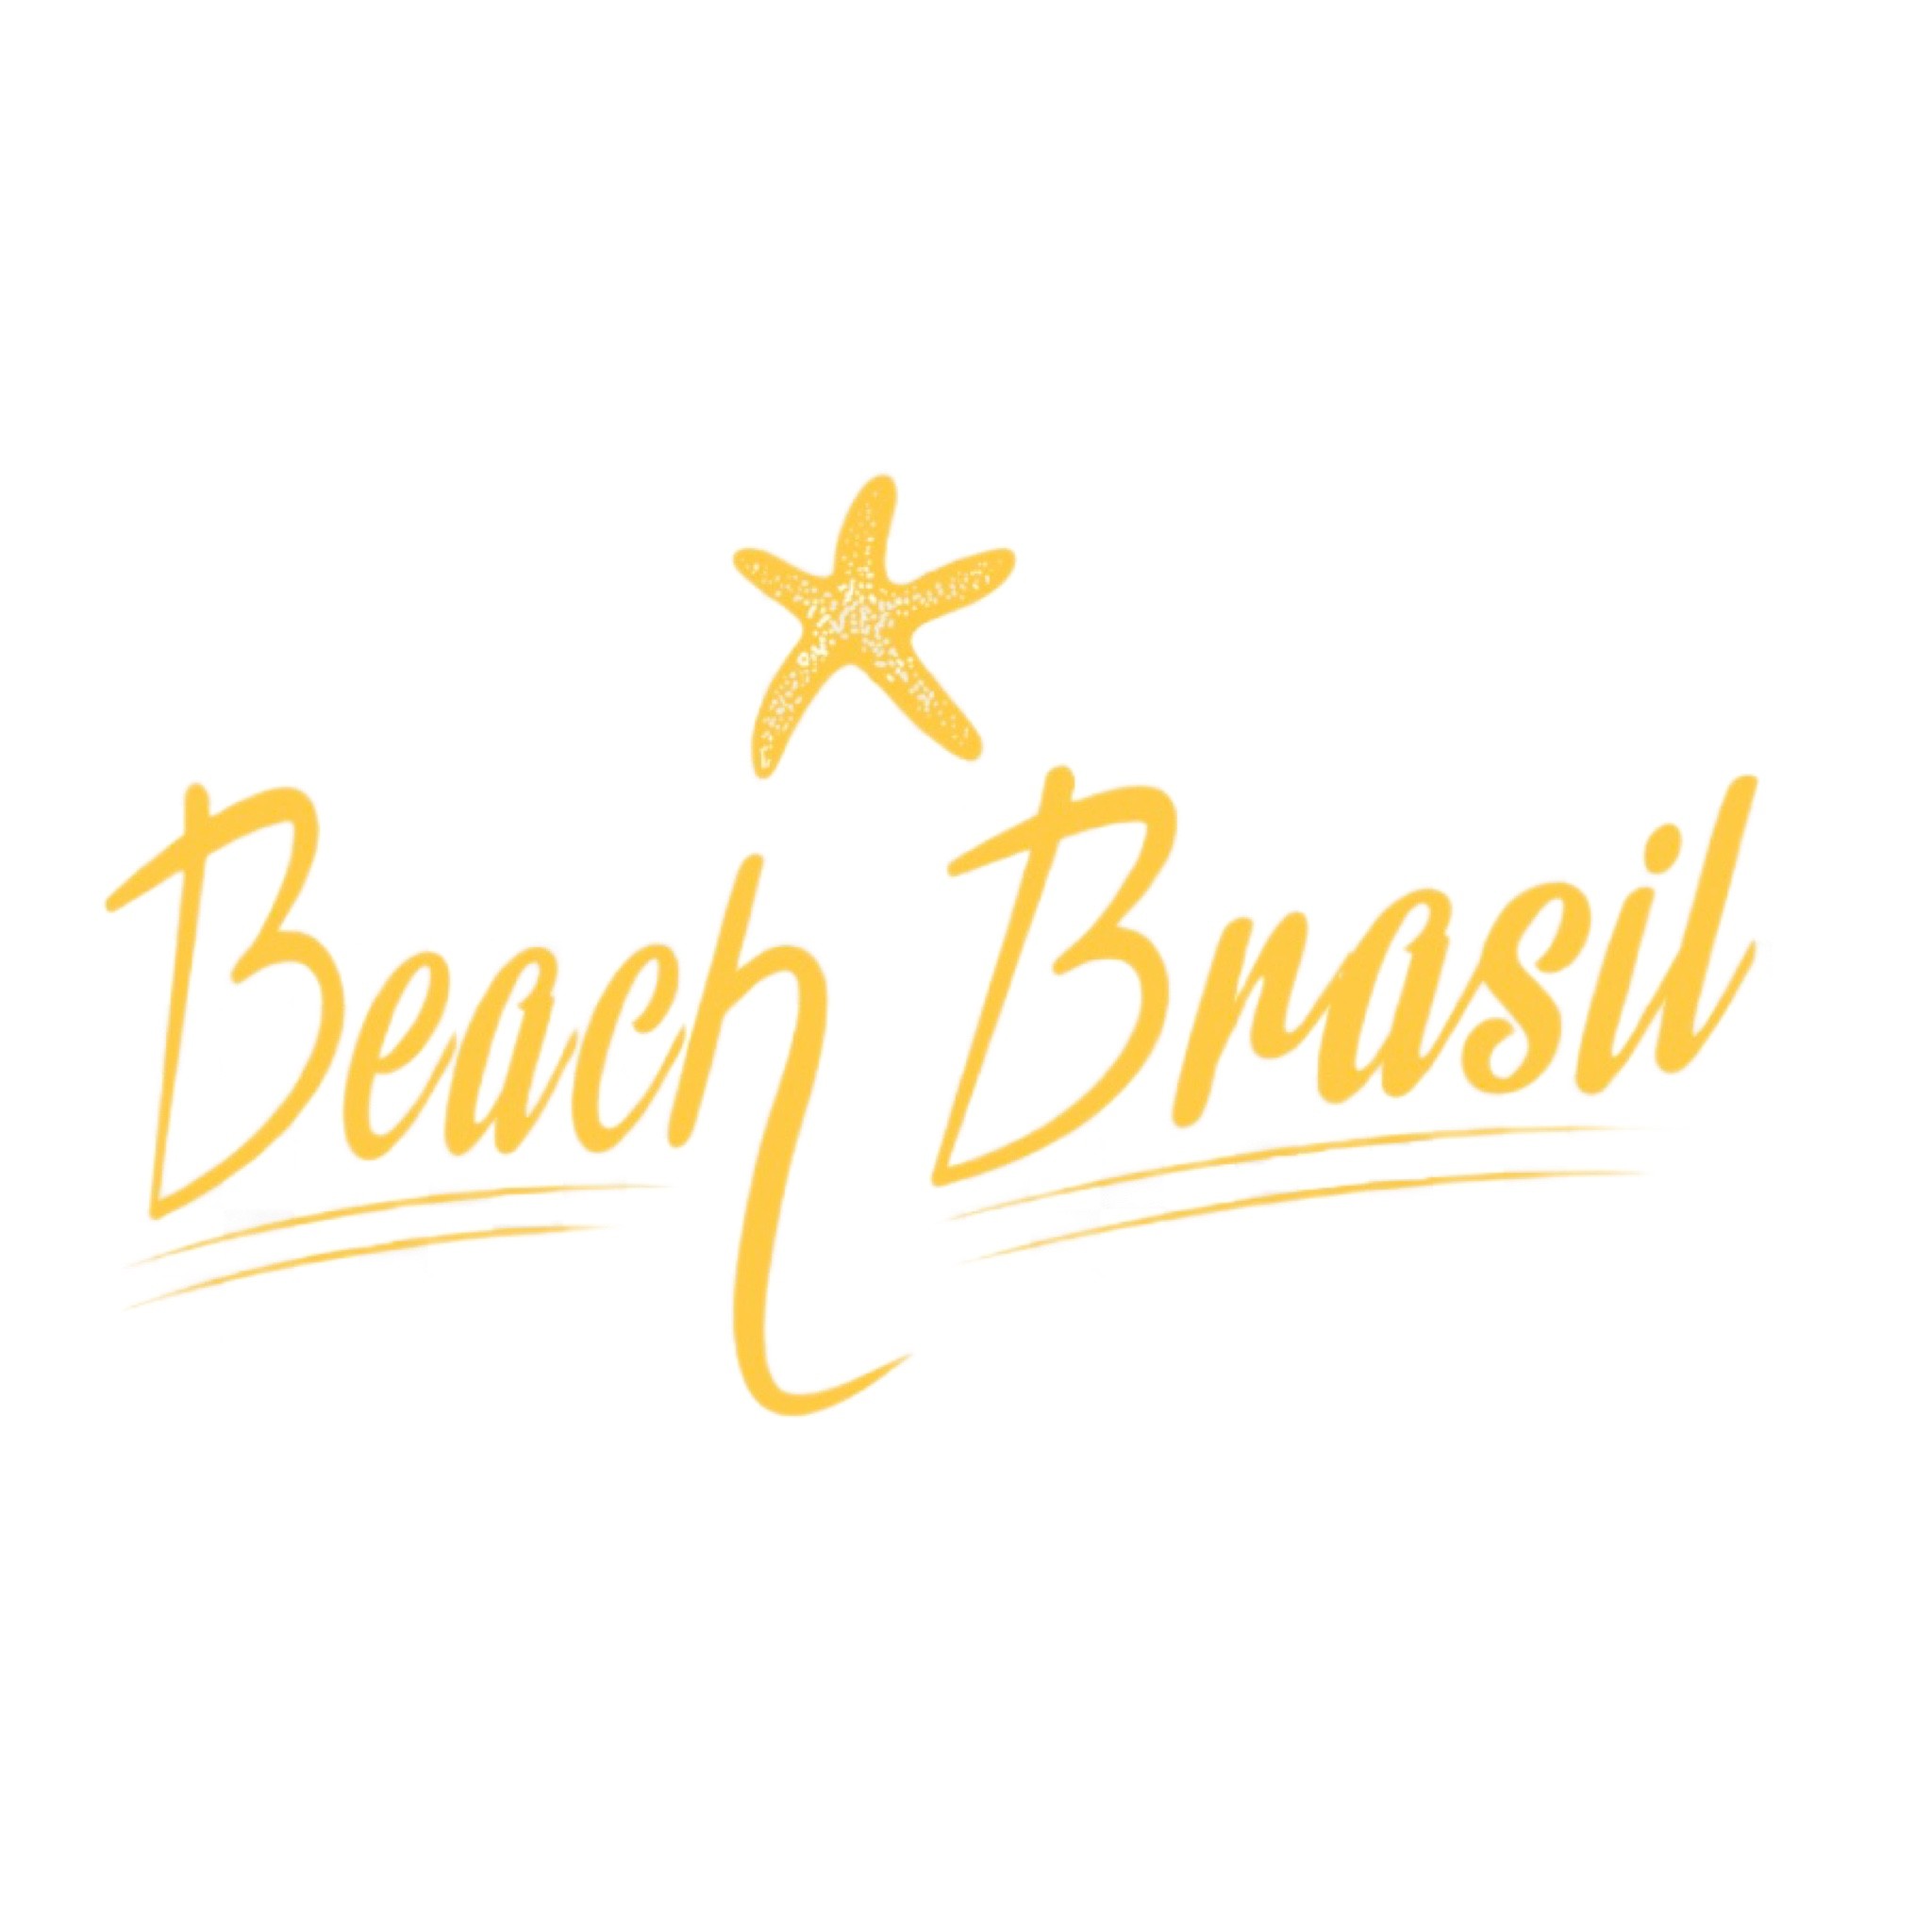 Beach Brasil